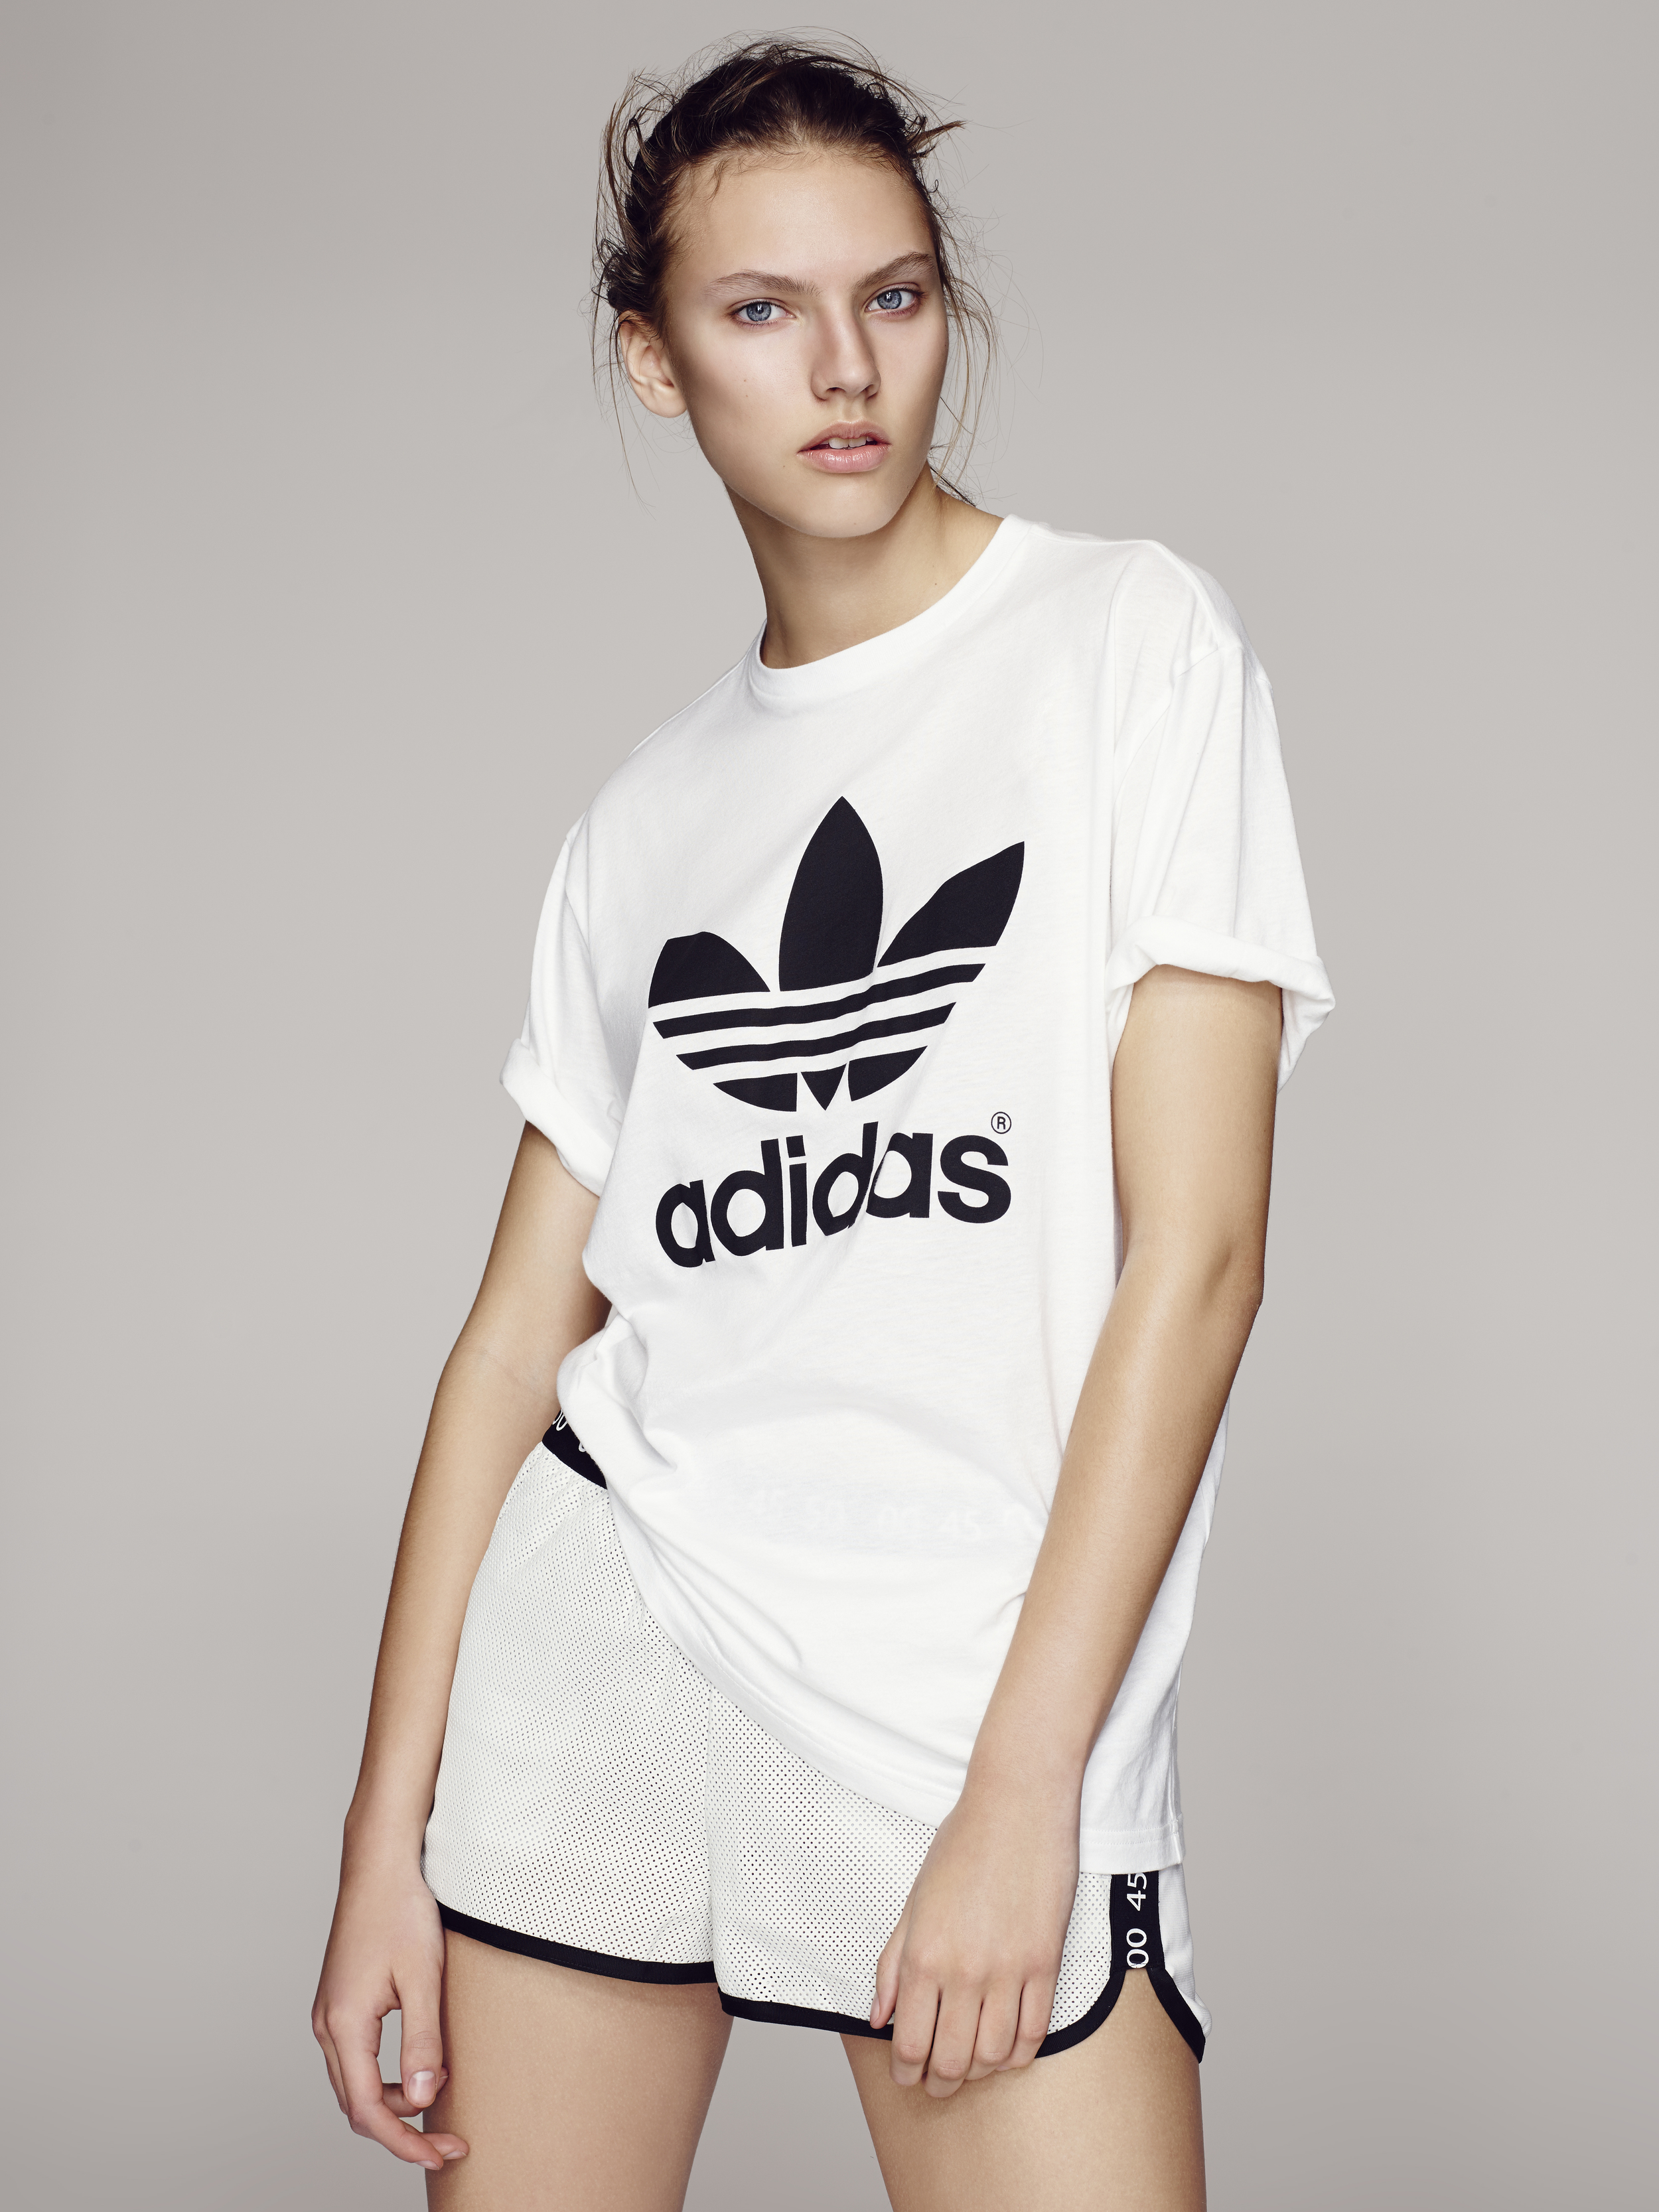  Adidas x Topshop  Photographer - Aitken Jolly  Director/Stylist - Kate Phelan 